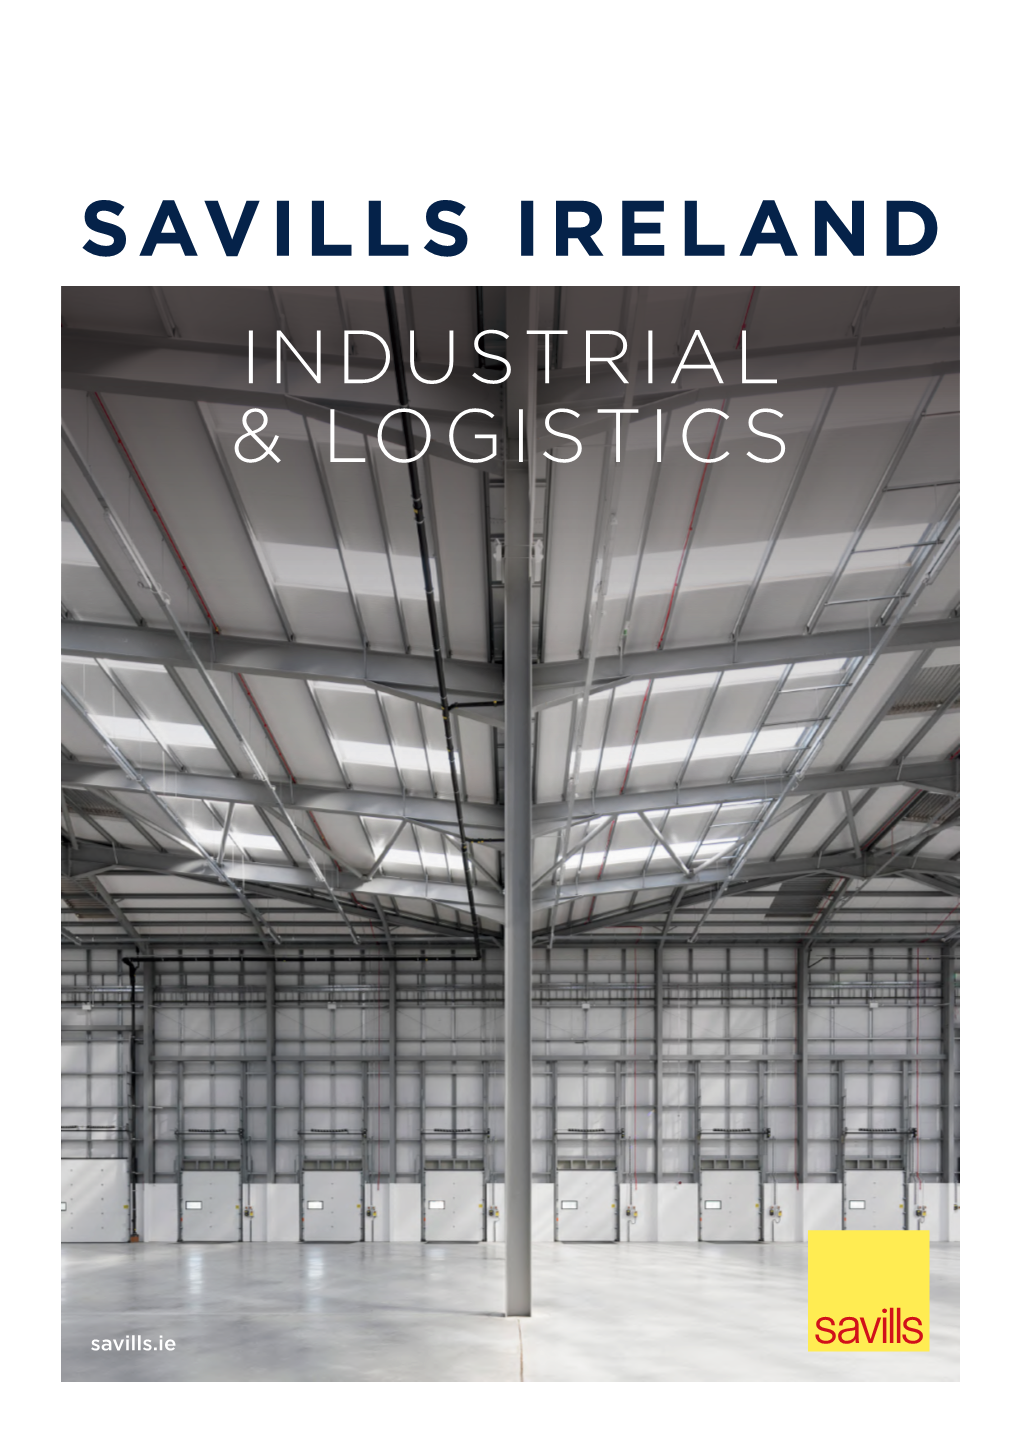 Savills Ireland Industrial & Logistics